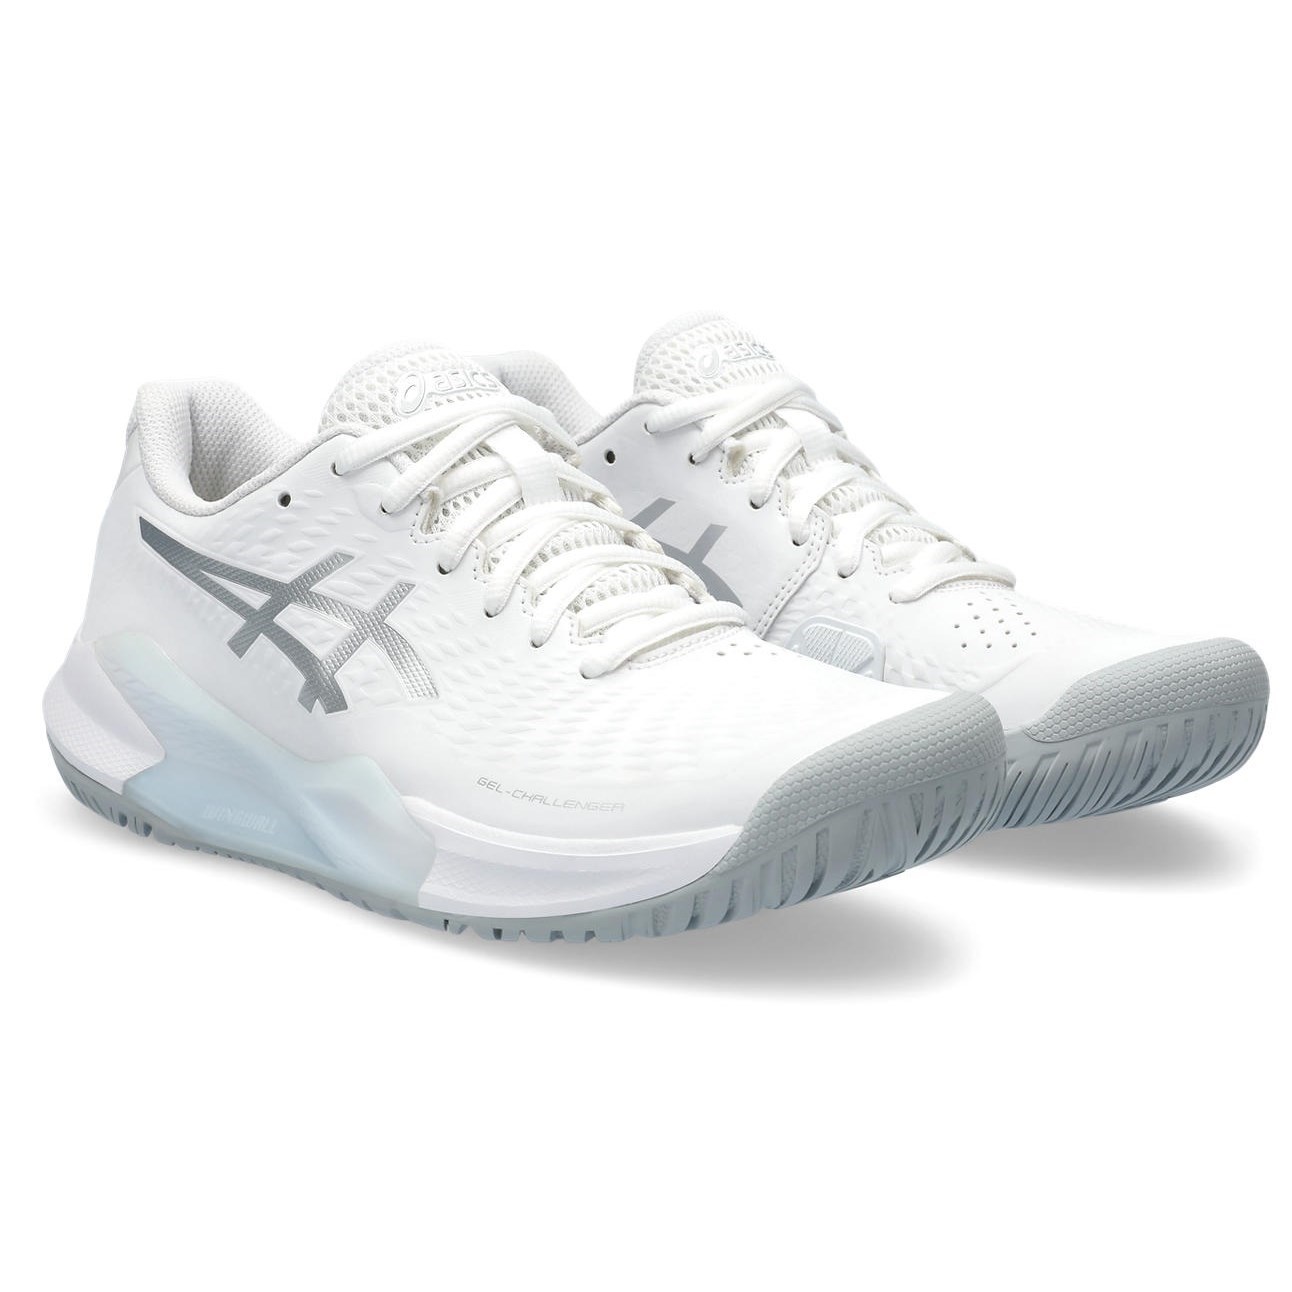 Asics Gel Challenger 14 Hardcourt - Womens Tennis Shoes - White/Pure ...